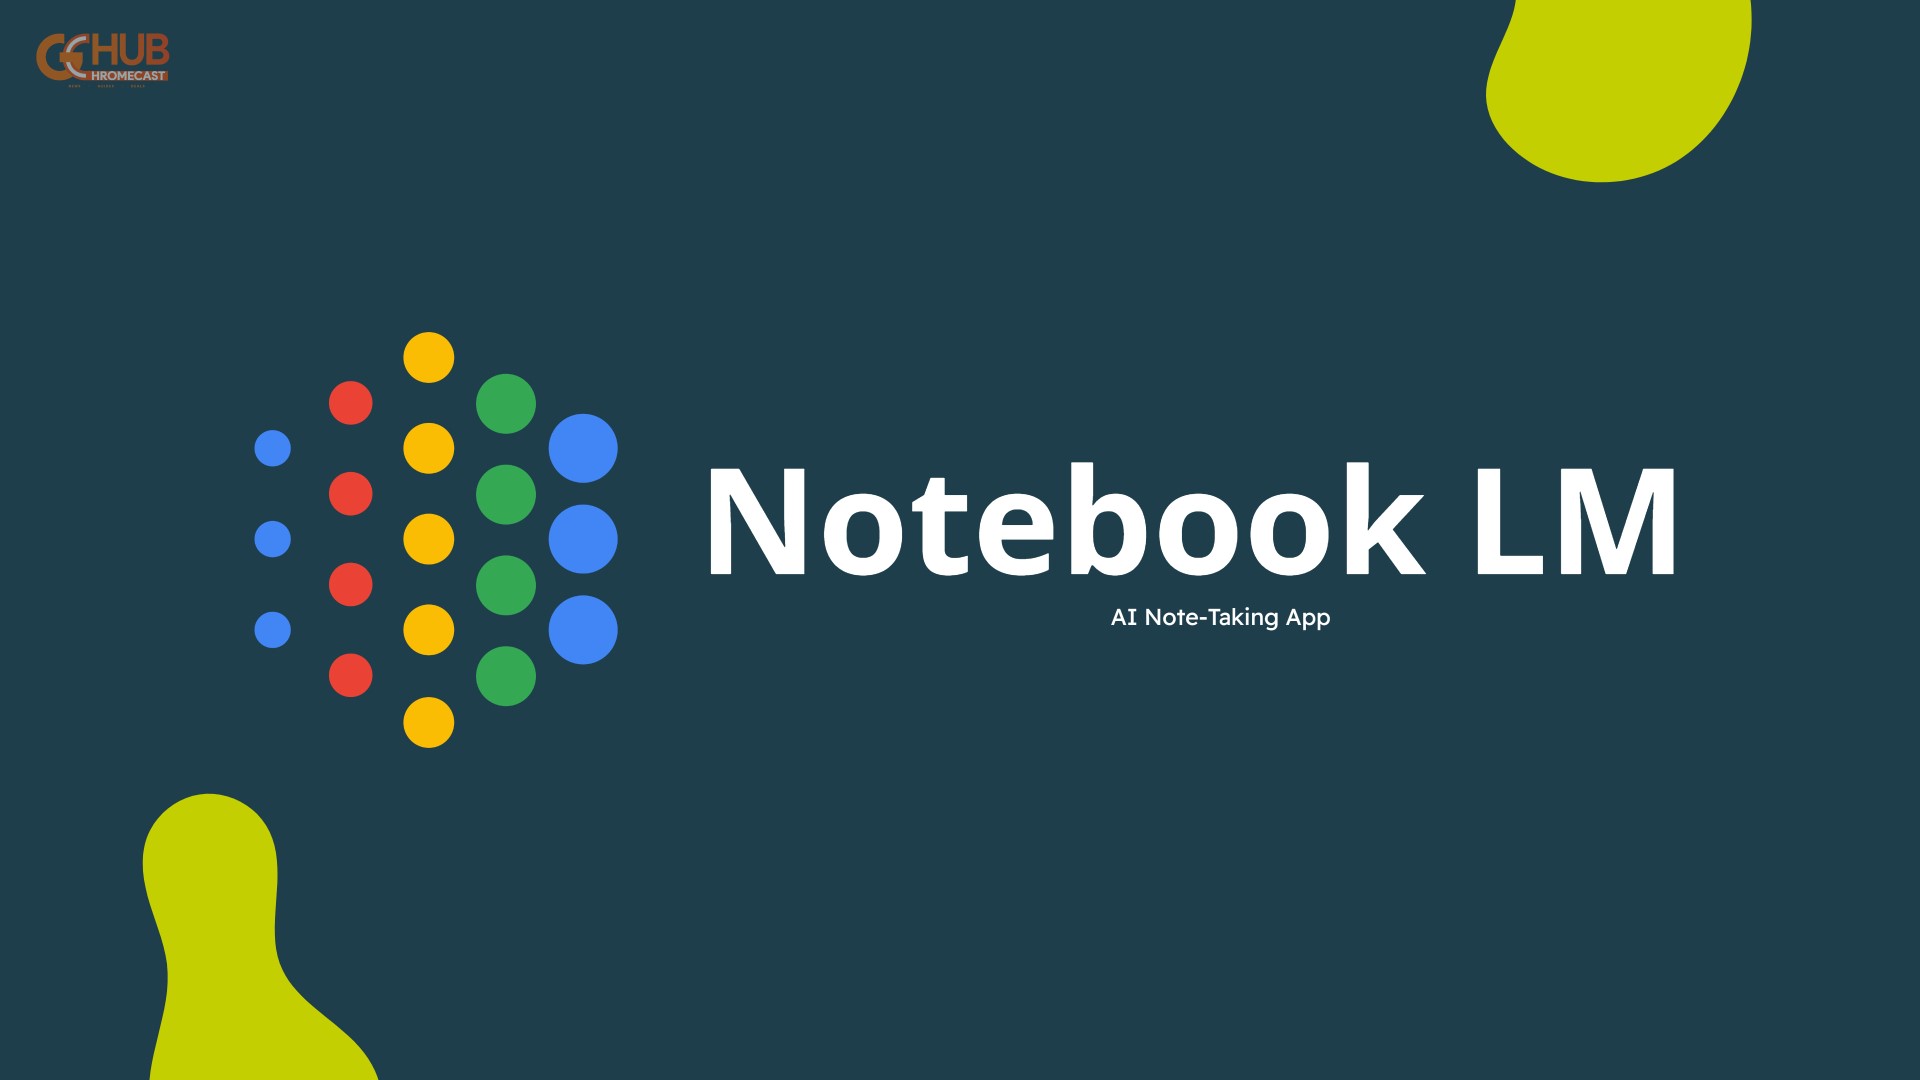 notebooklm logo